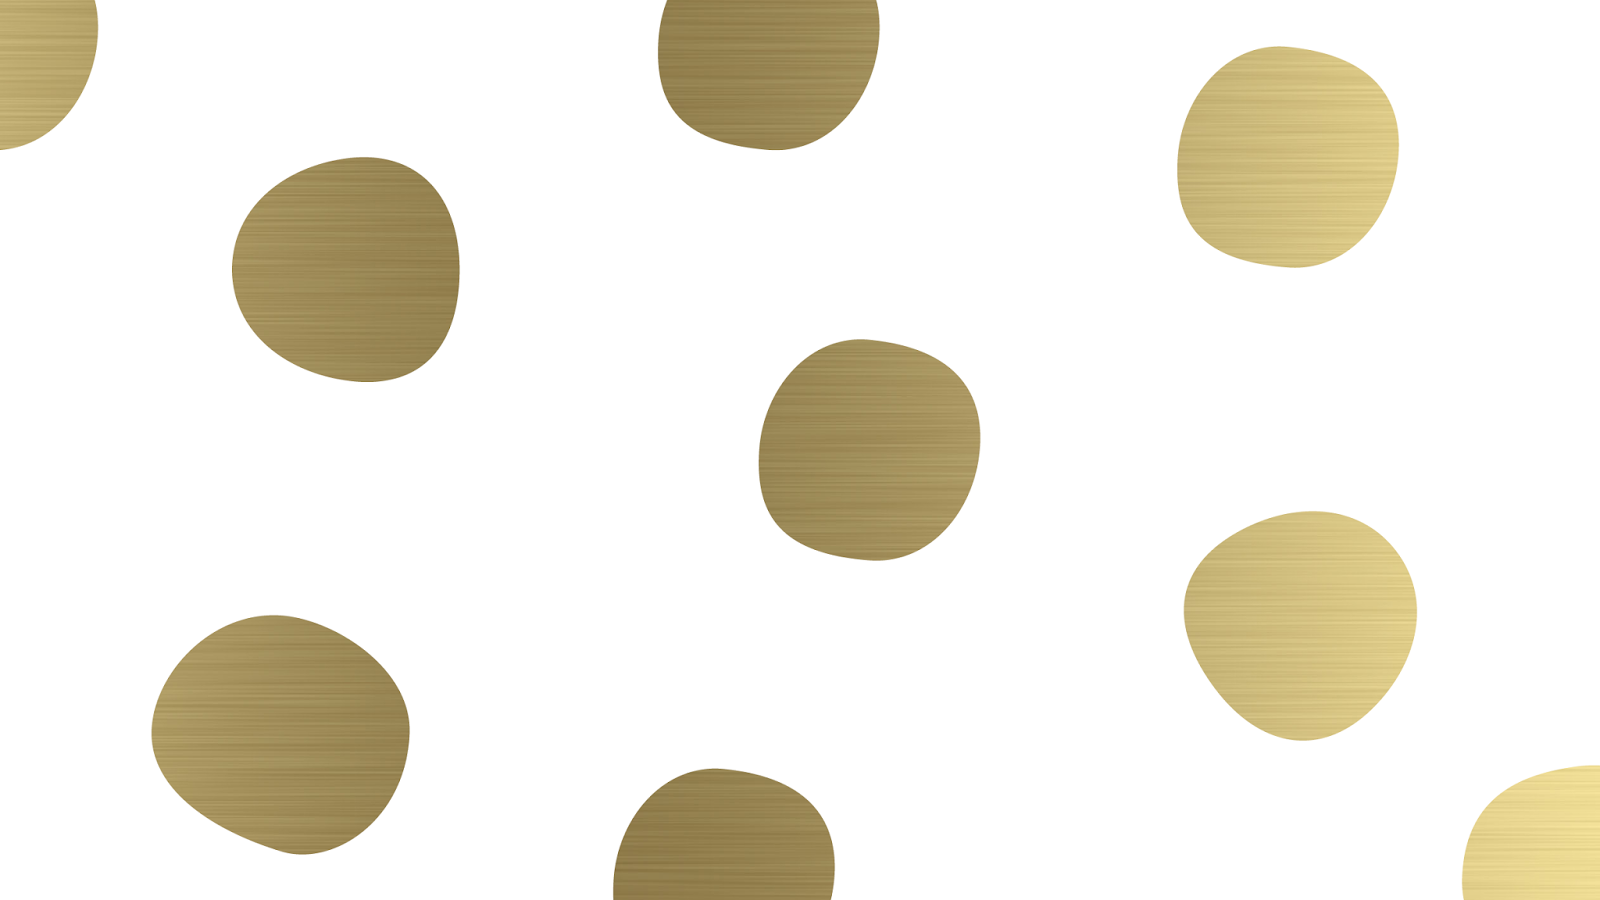 gold polka dot desktop wallpaper